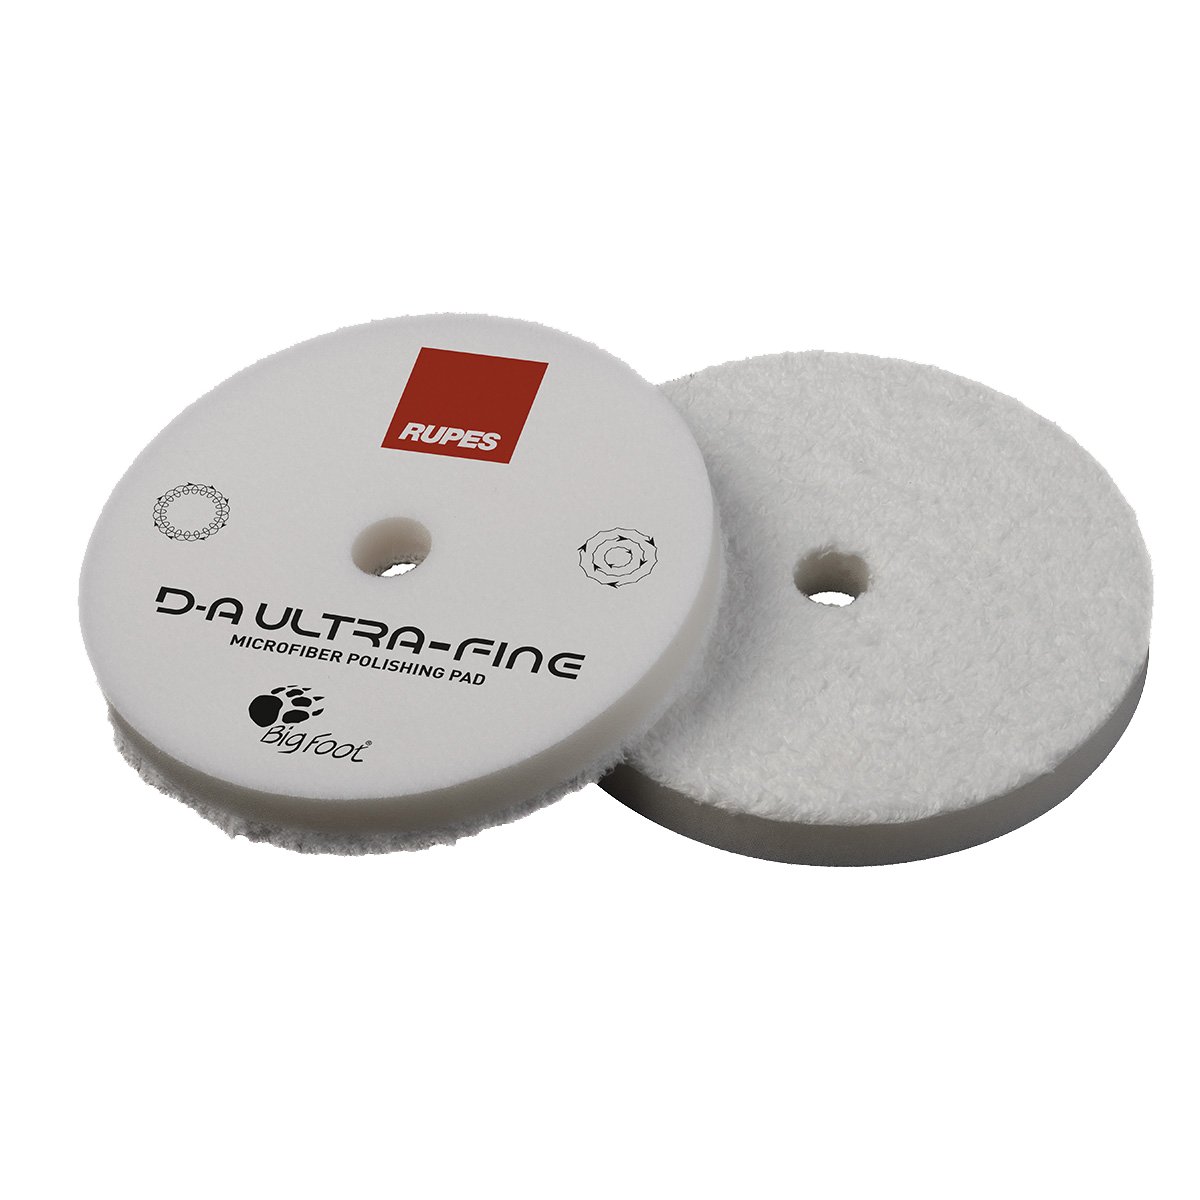 D-A Ultra Fine Microfiber Polishing Pad - 85mm